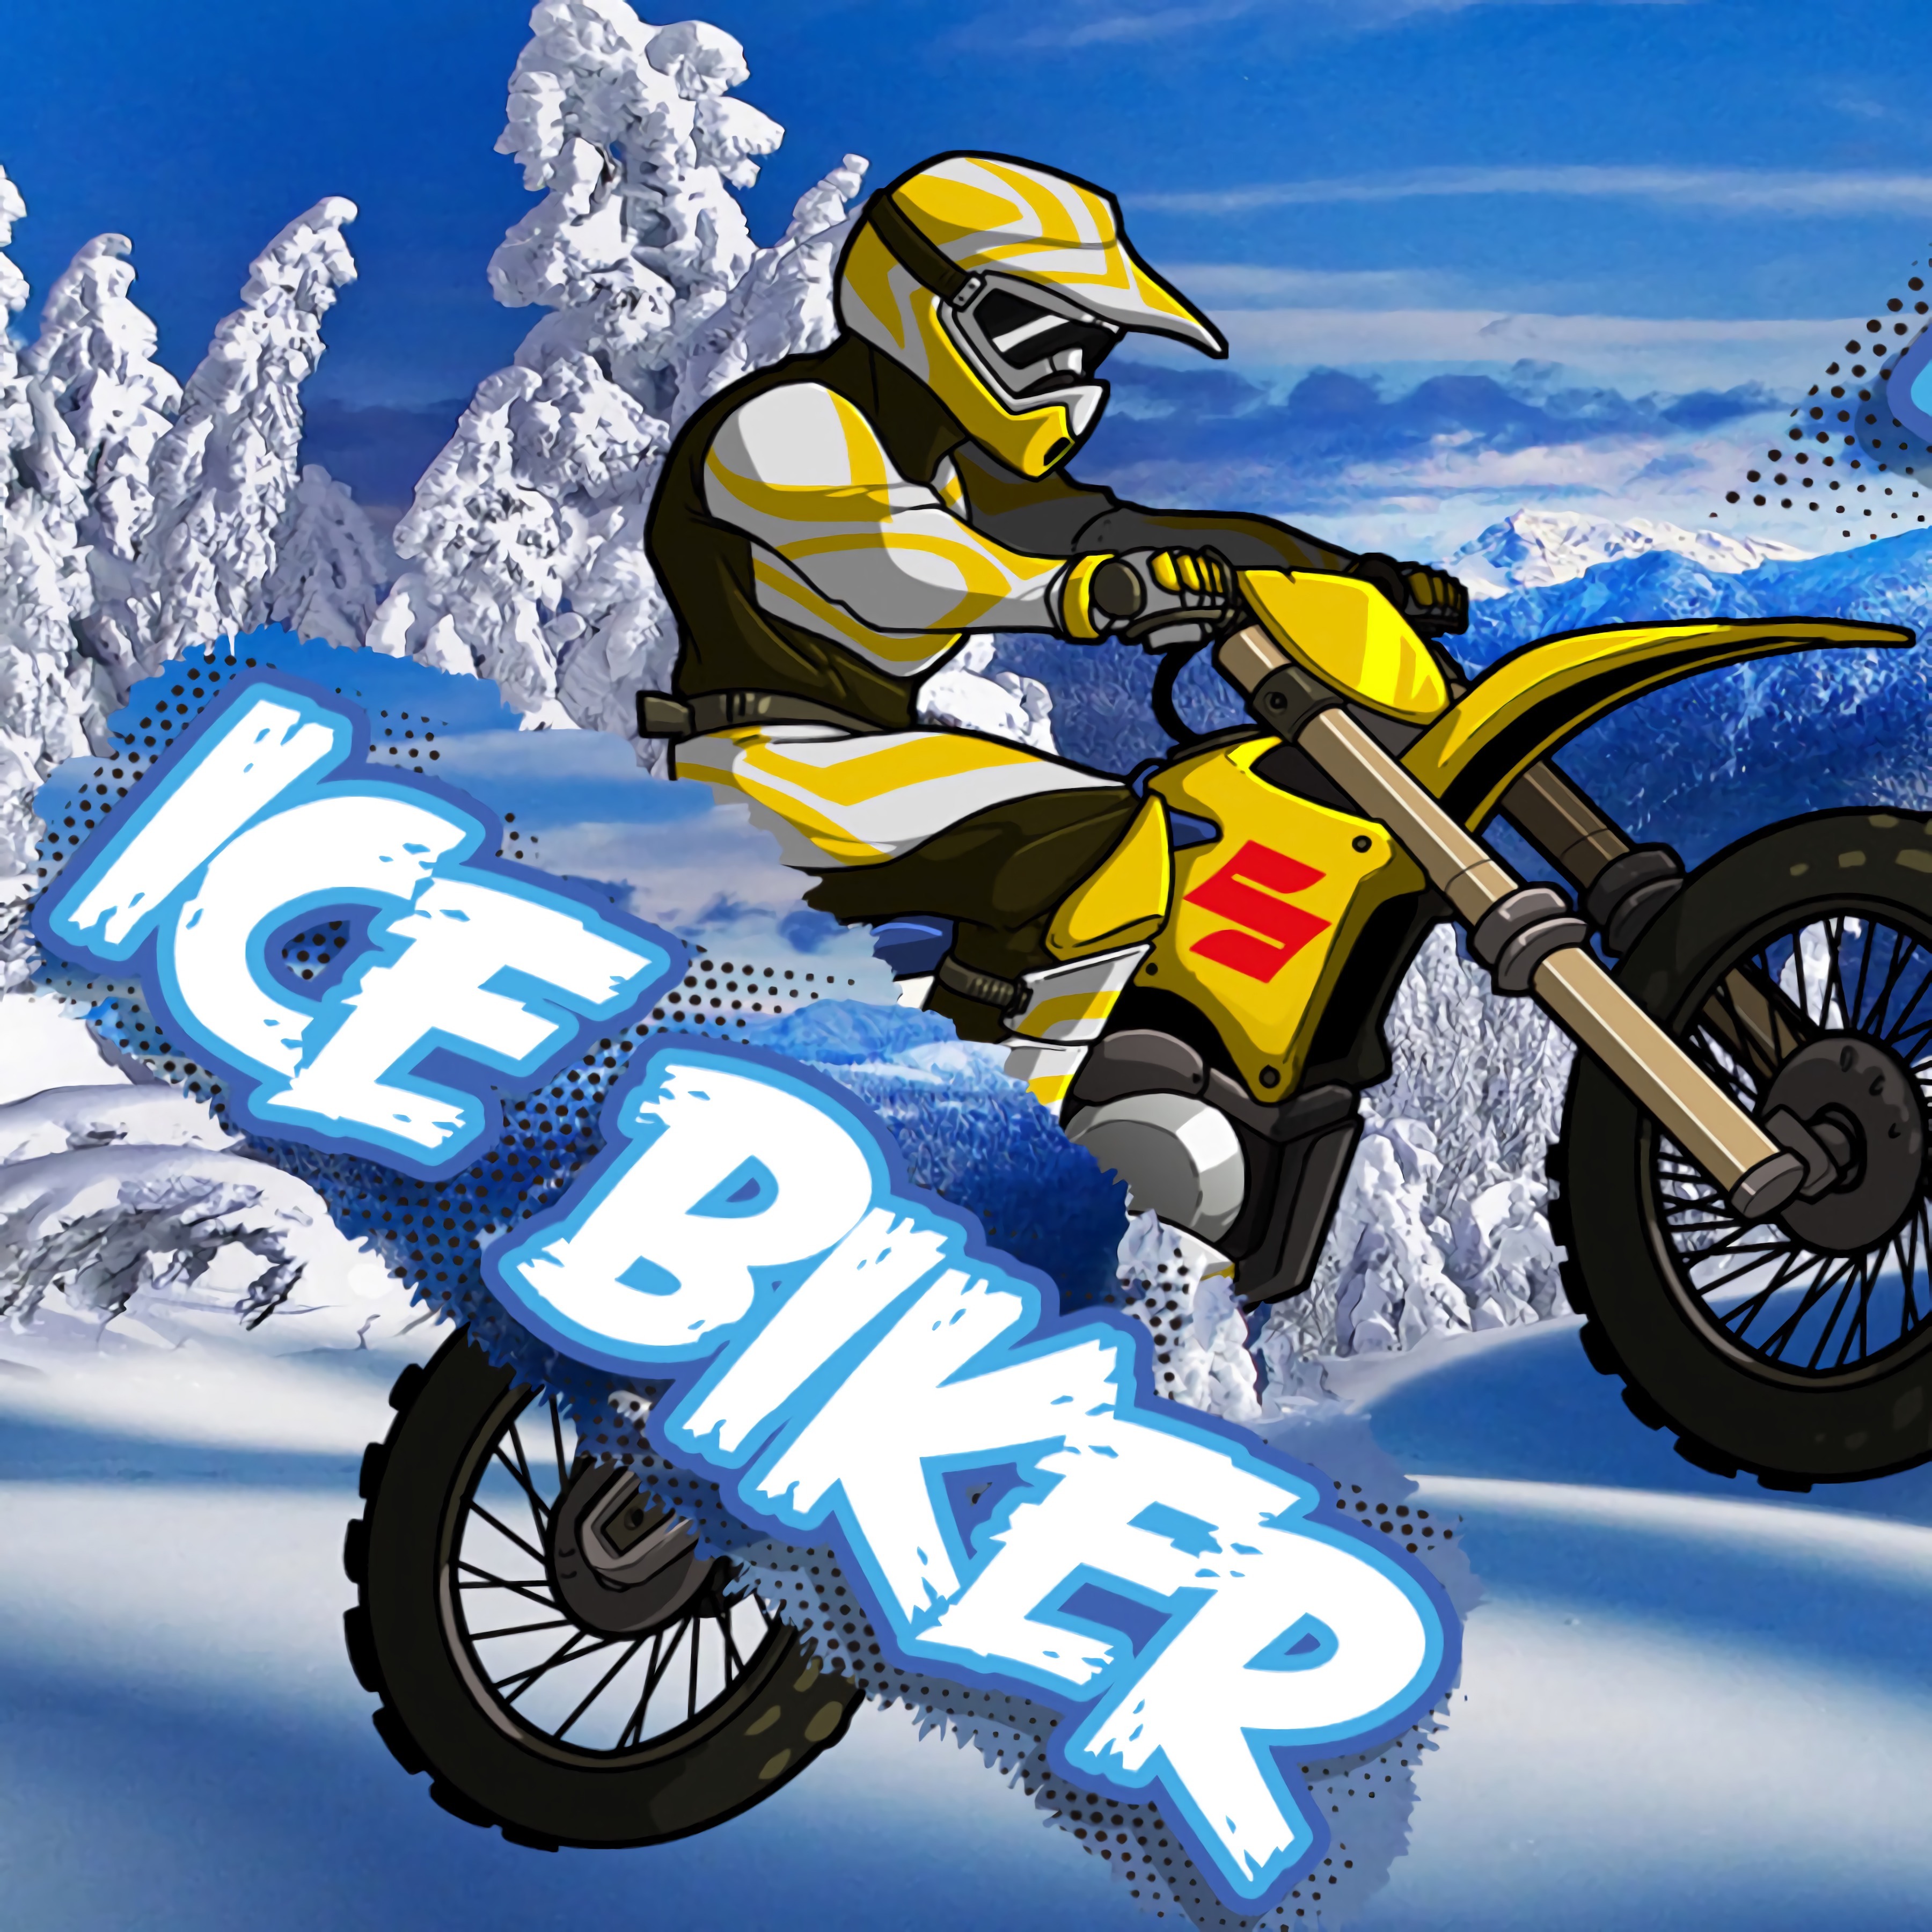 Ice Biker